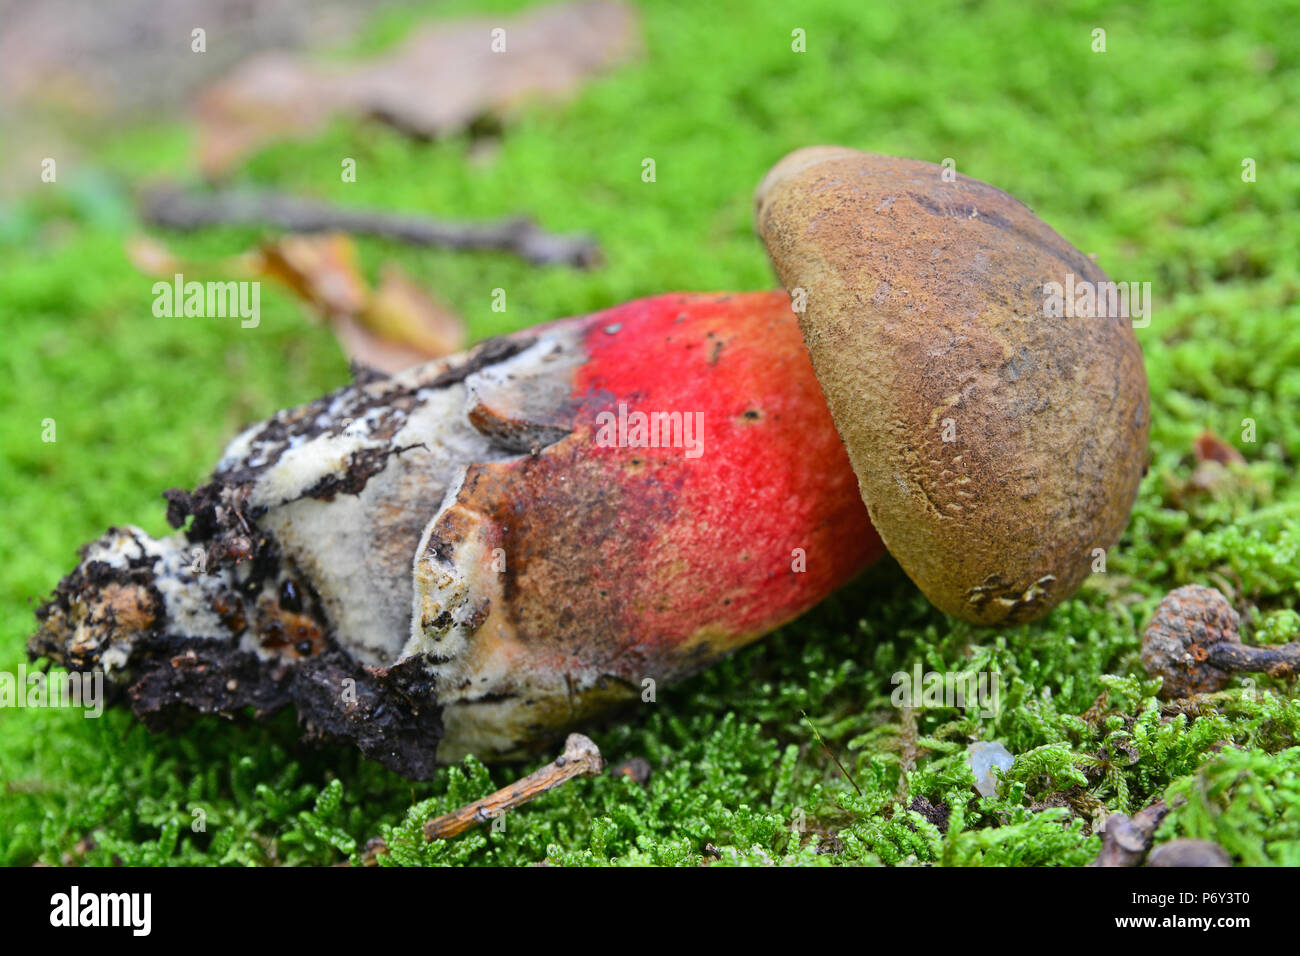 a boletus calopus mushroom in the forest Stock Photo